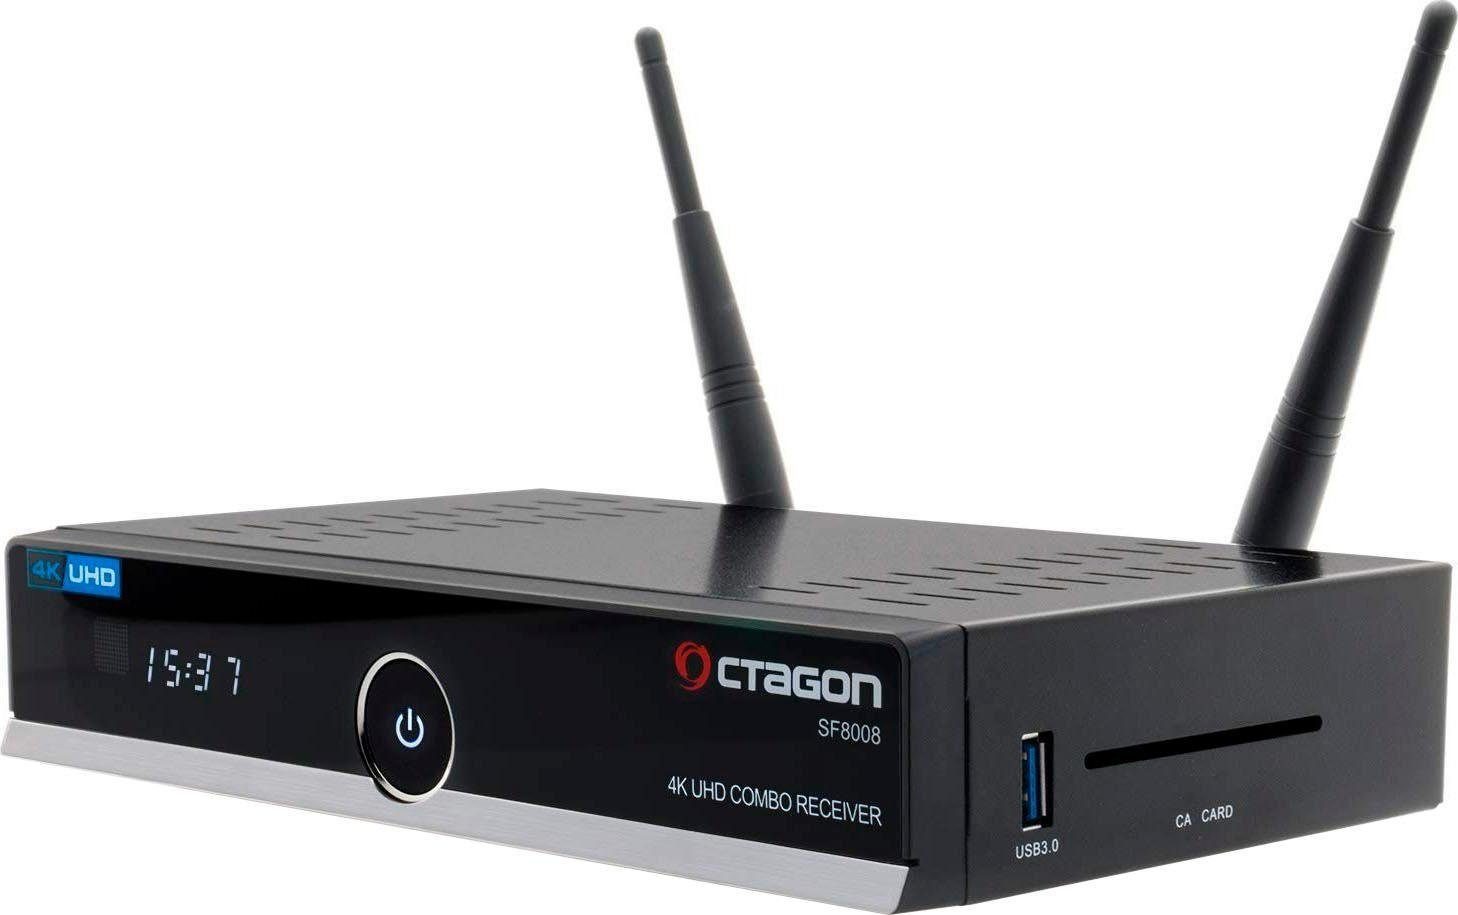 WLAN) Receiver SF8008 DVB-T2 OCTAGON (Ethernet), (LAN HD